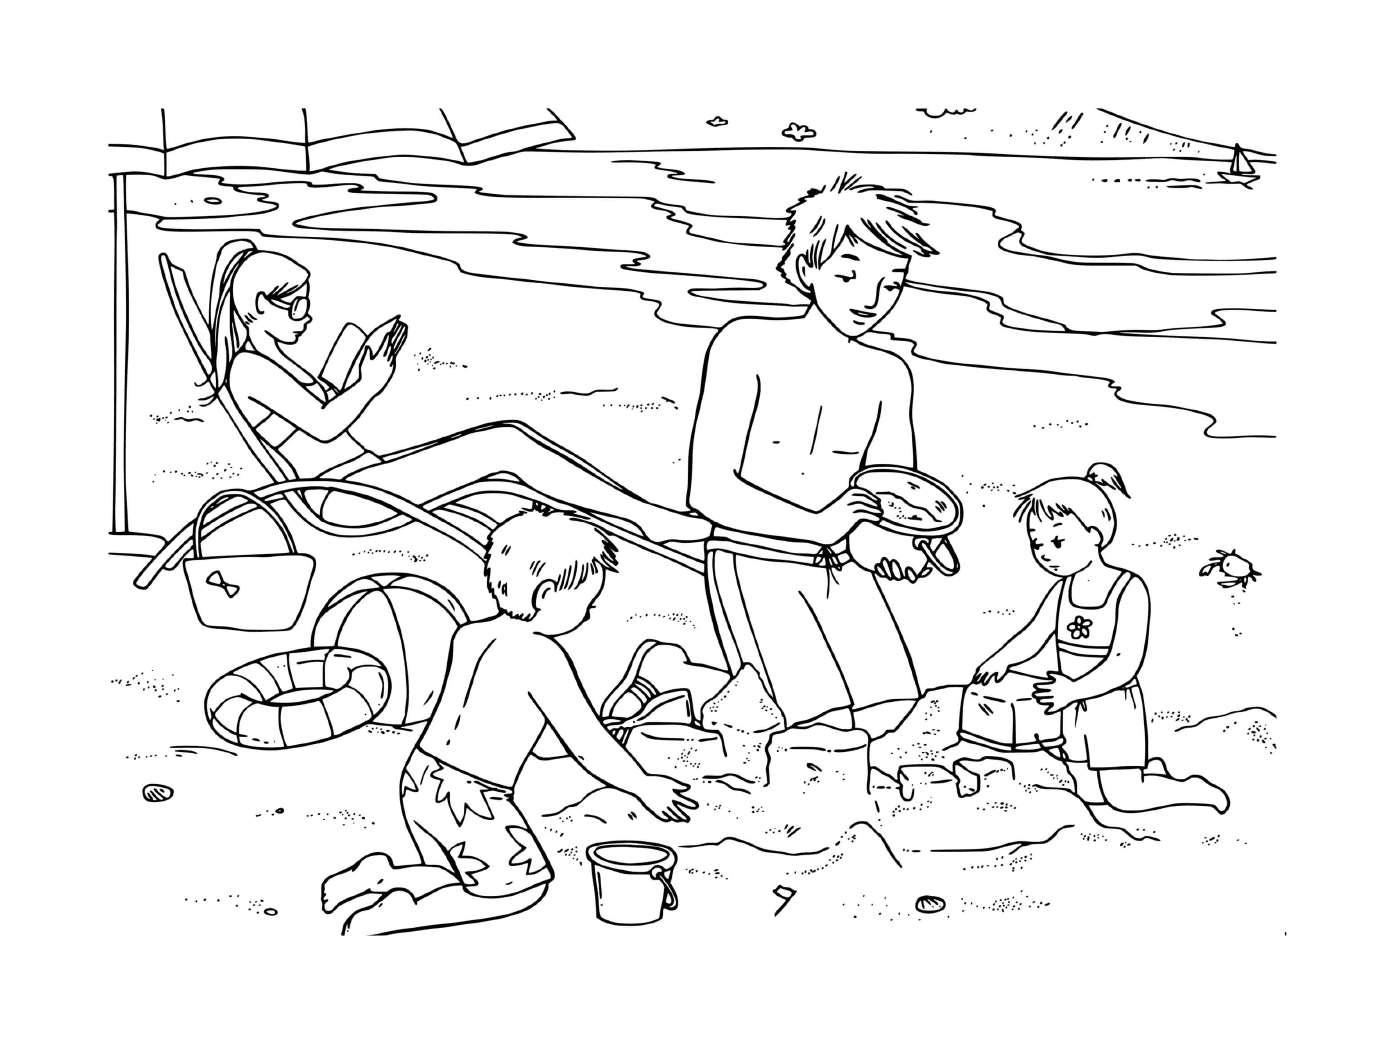  Family having fun on the beach 